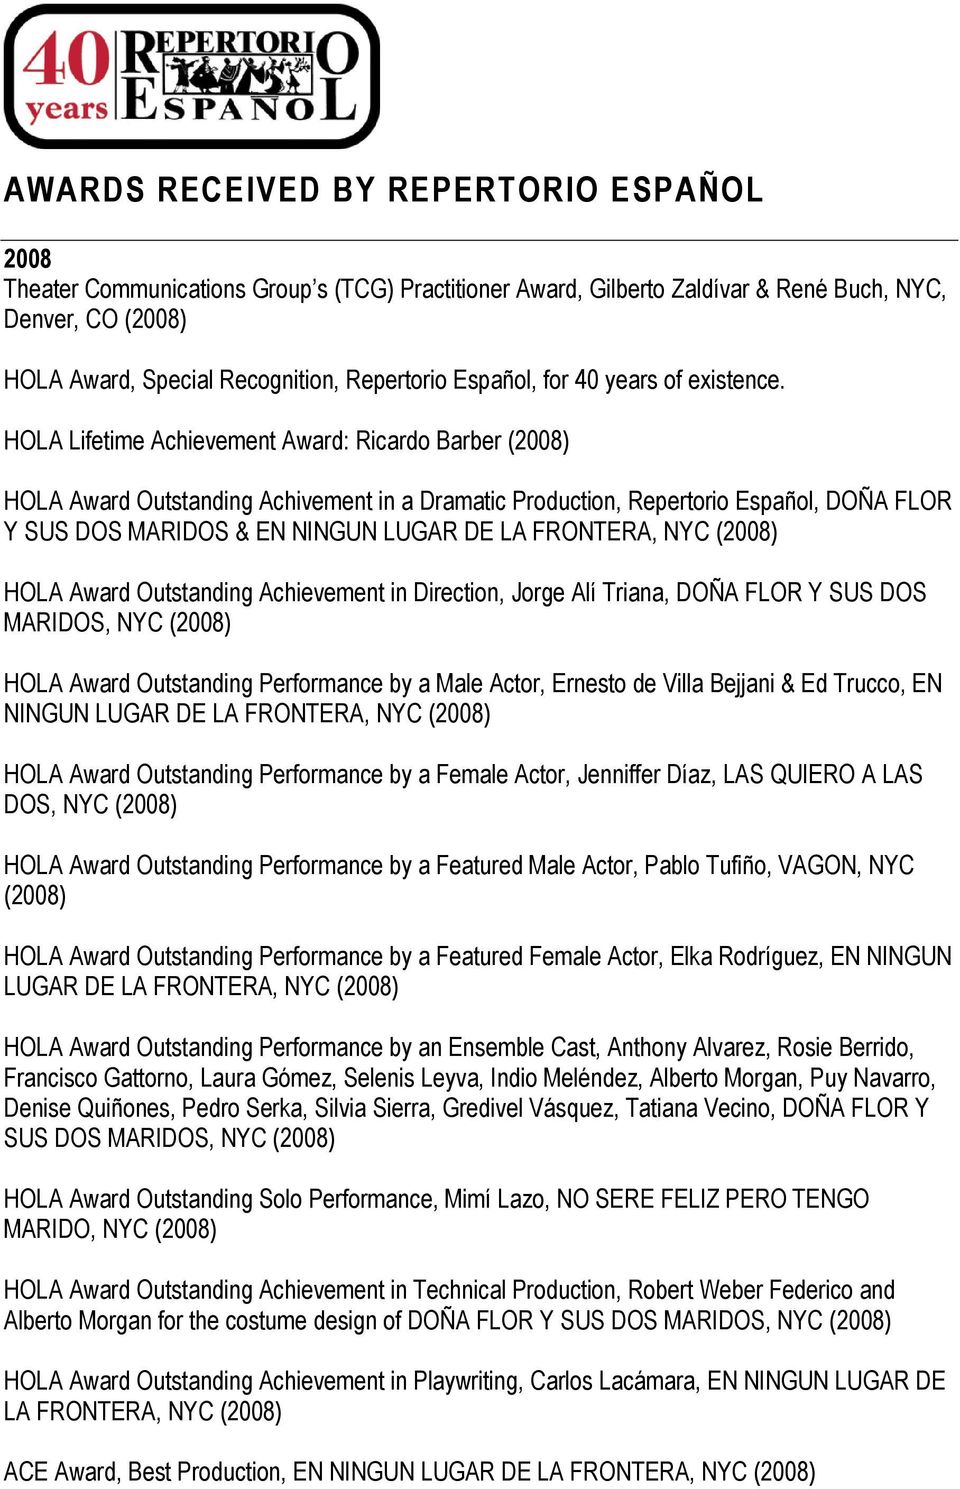 HOLA Lifetime Achievement Award: Ricardo Barber HOLA Award Outstanding Achivement in a Dramatic Production, Repertorio Español, DOÑA FLOR Y SUS DOS MARIDOS & EN NINGUN LUGAR DE LA FRONTERA, NYC HOLA